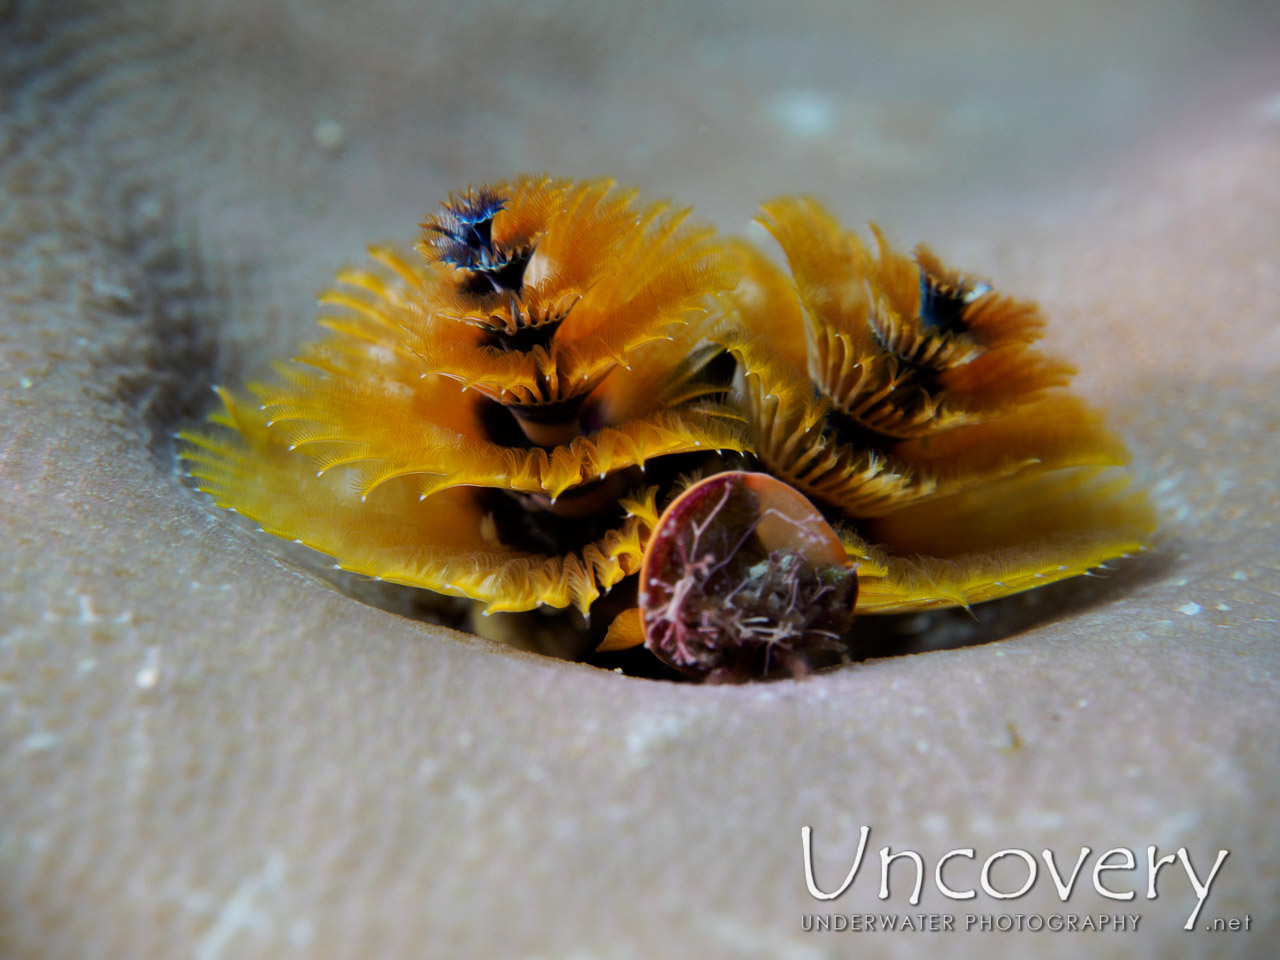 Christmas Tree Worm (spirobranchus Sp.), photo taken in Maldives, Male Atoll, South Male Atoll, Kalhuhuraa Reef